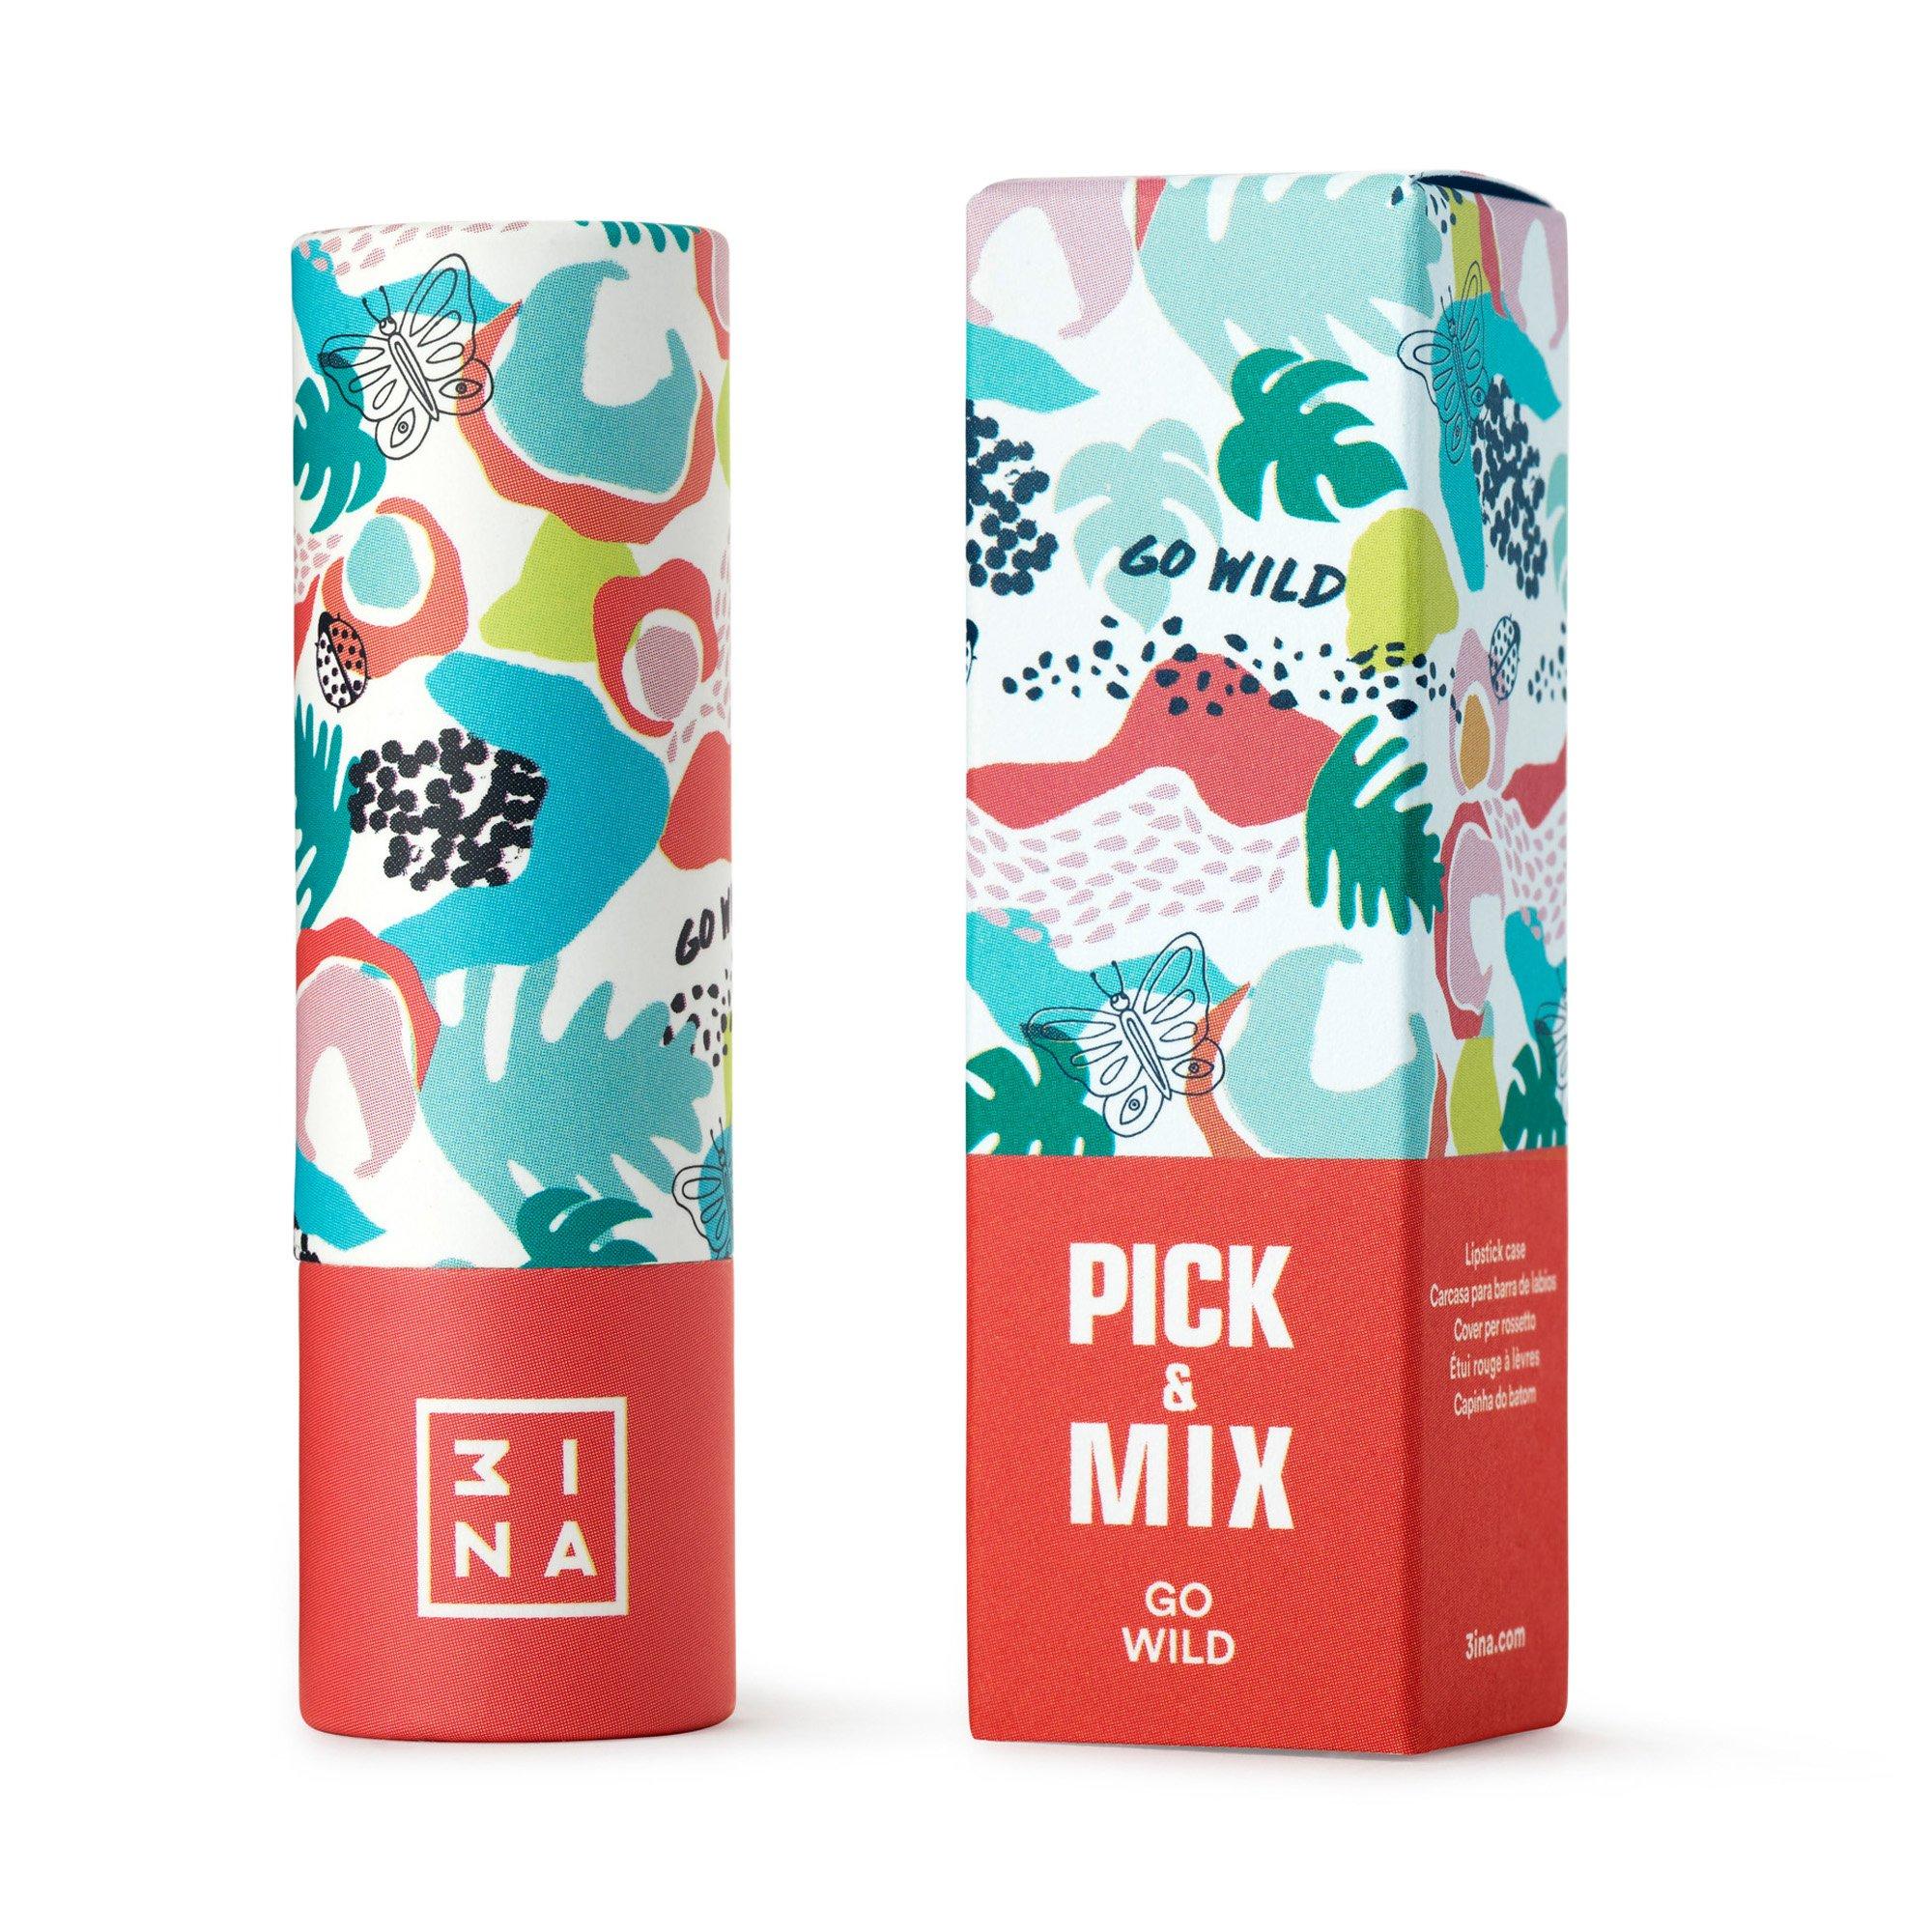 3INA Pick & Mix Pick & Mix - Go Wild 